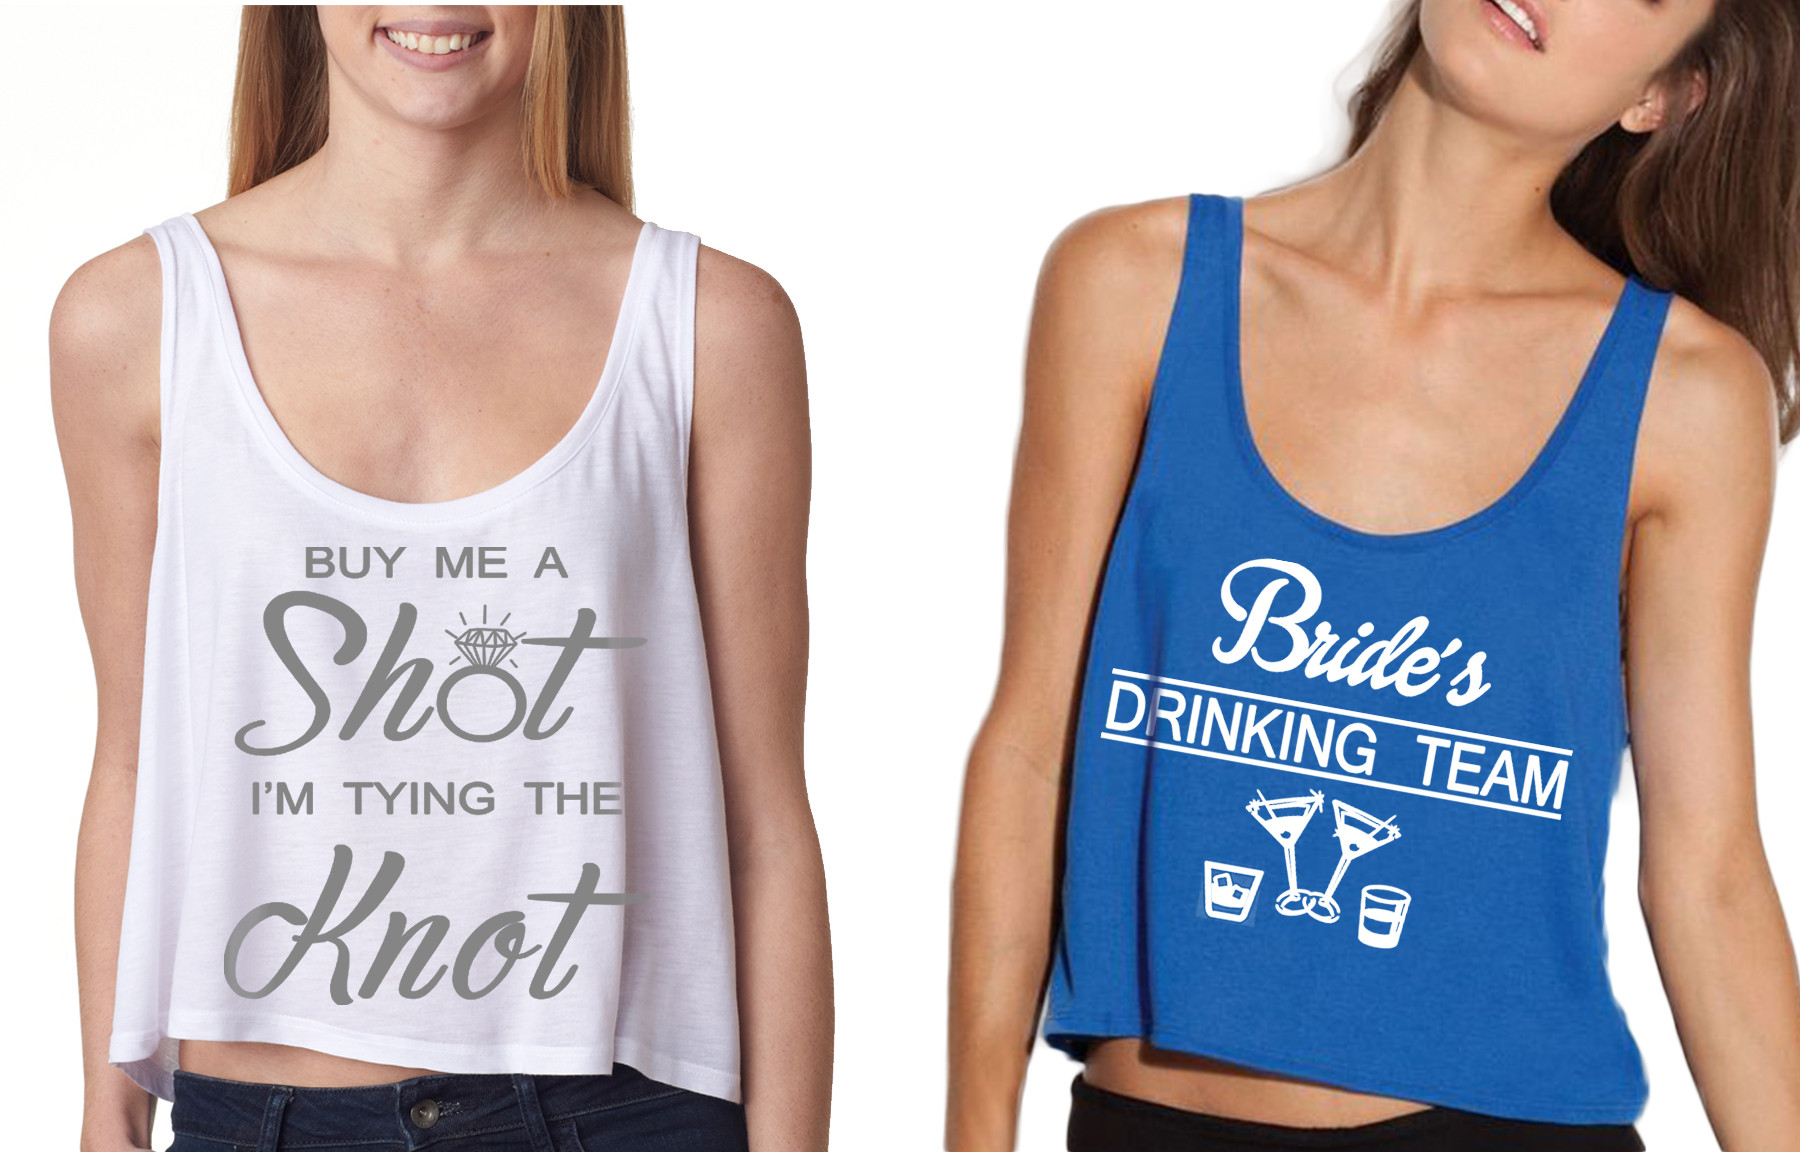 Bachelorette Party Shirts Ideas
 20 T Shirt Designs Ideas for a Bachelorette Party T